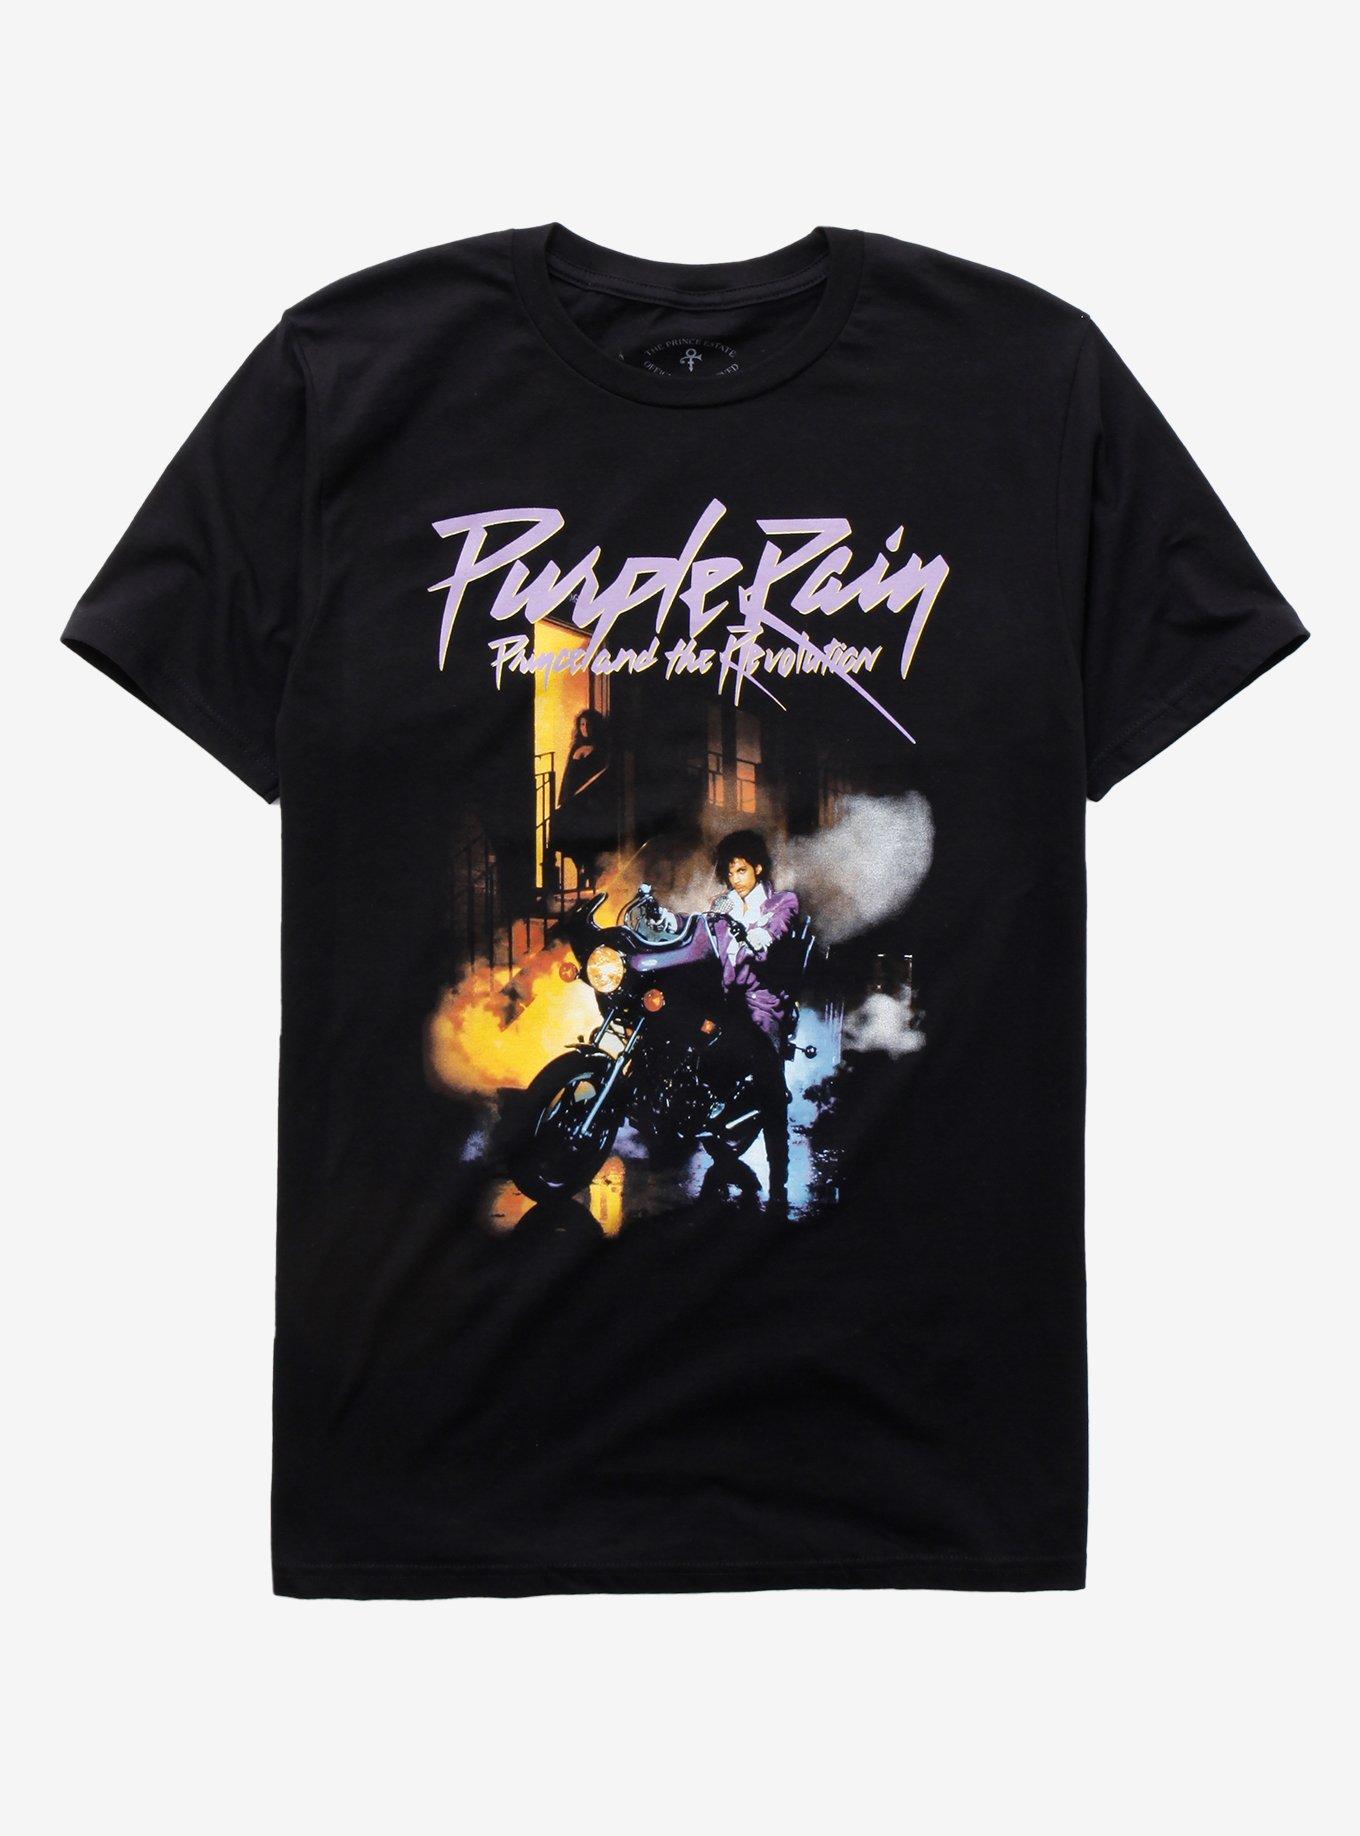 Absay Kollega middag Prince Purple Rain T-Shirt | Hot Topic